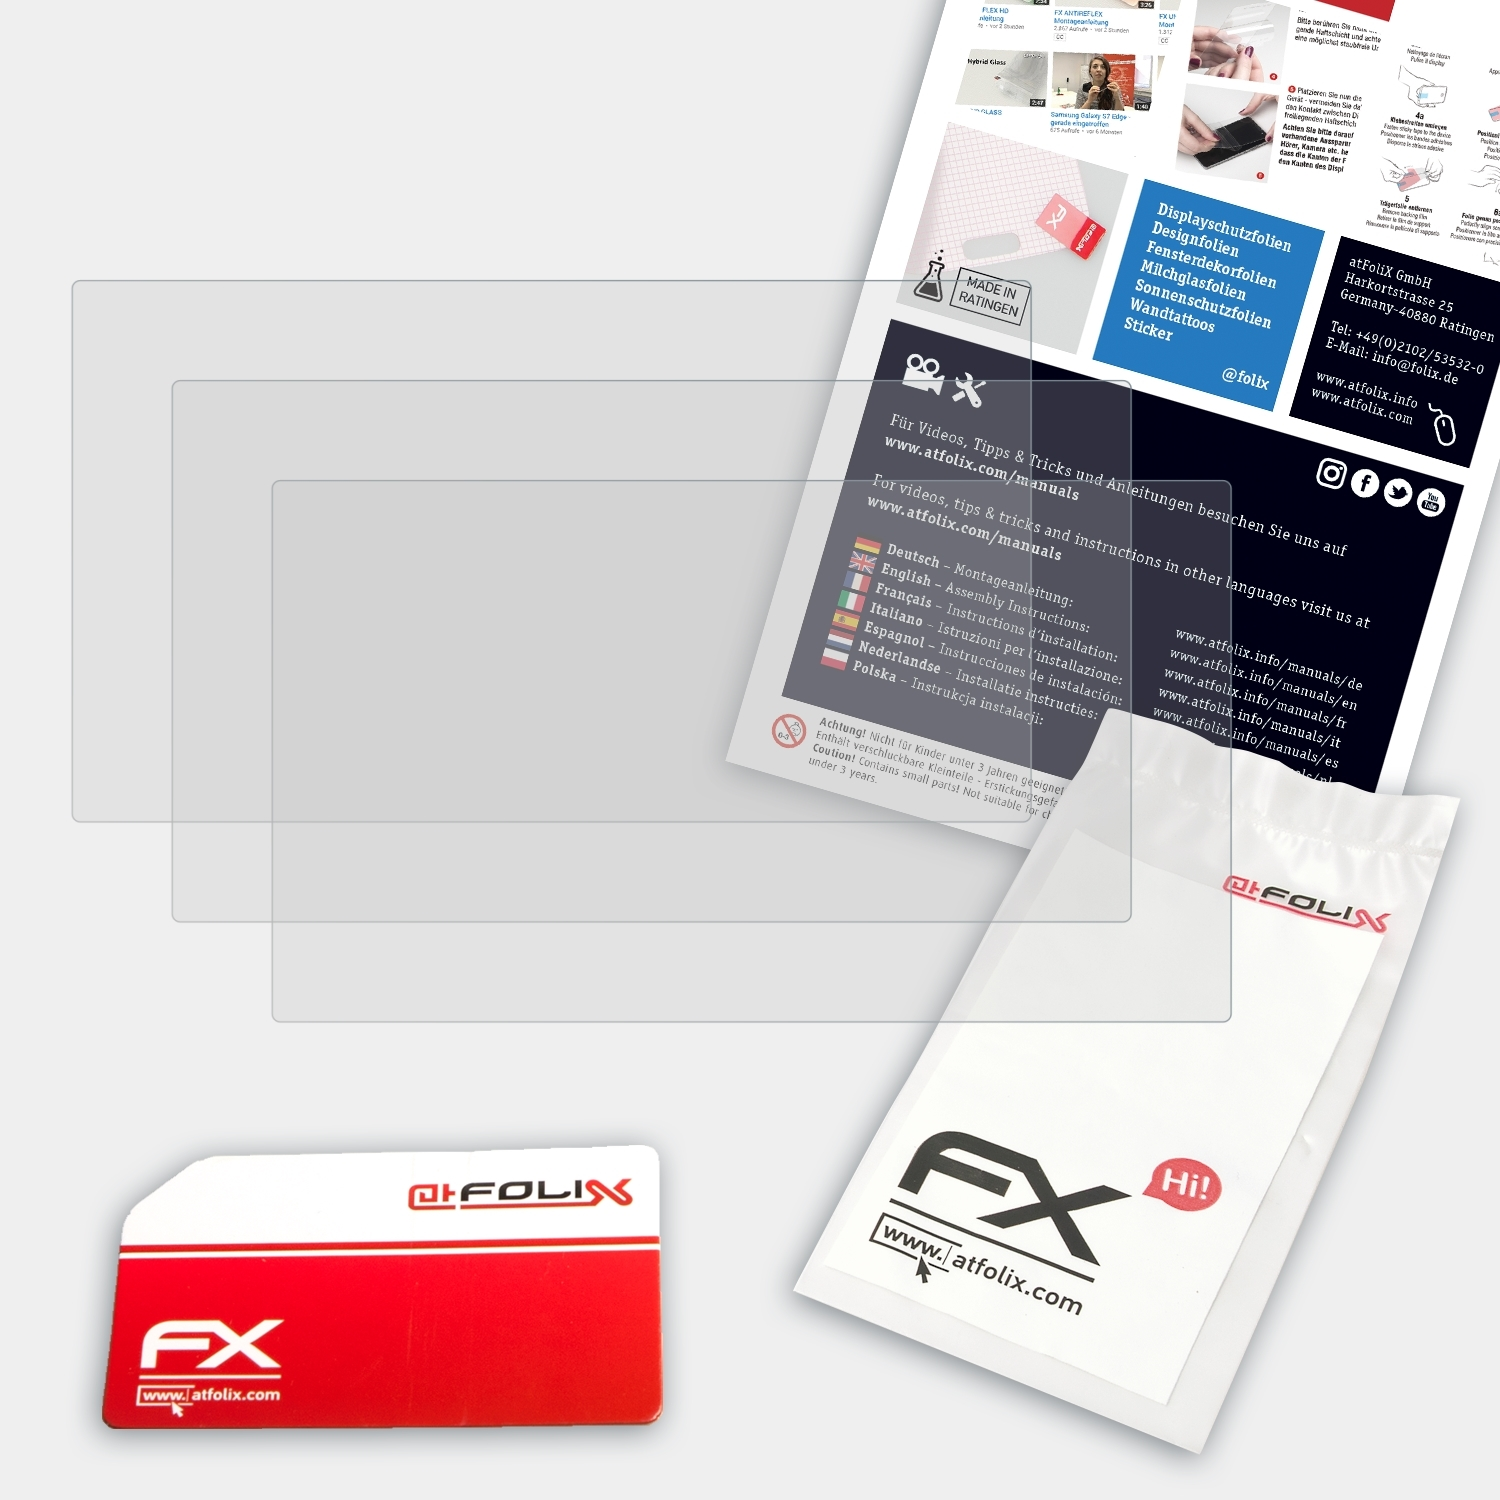 /AX33) Sony FDR-AXP33 3x Displayschutz(für FX-Antireflex ATFOLIX